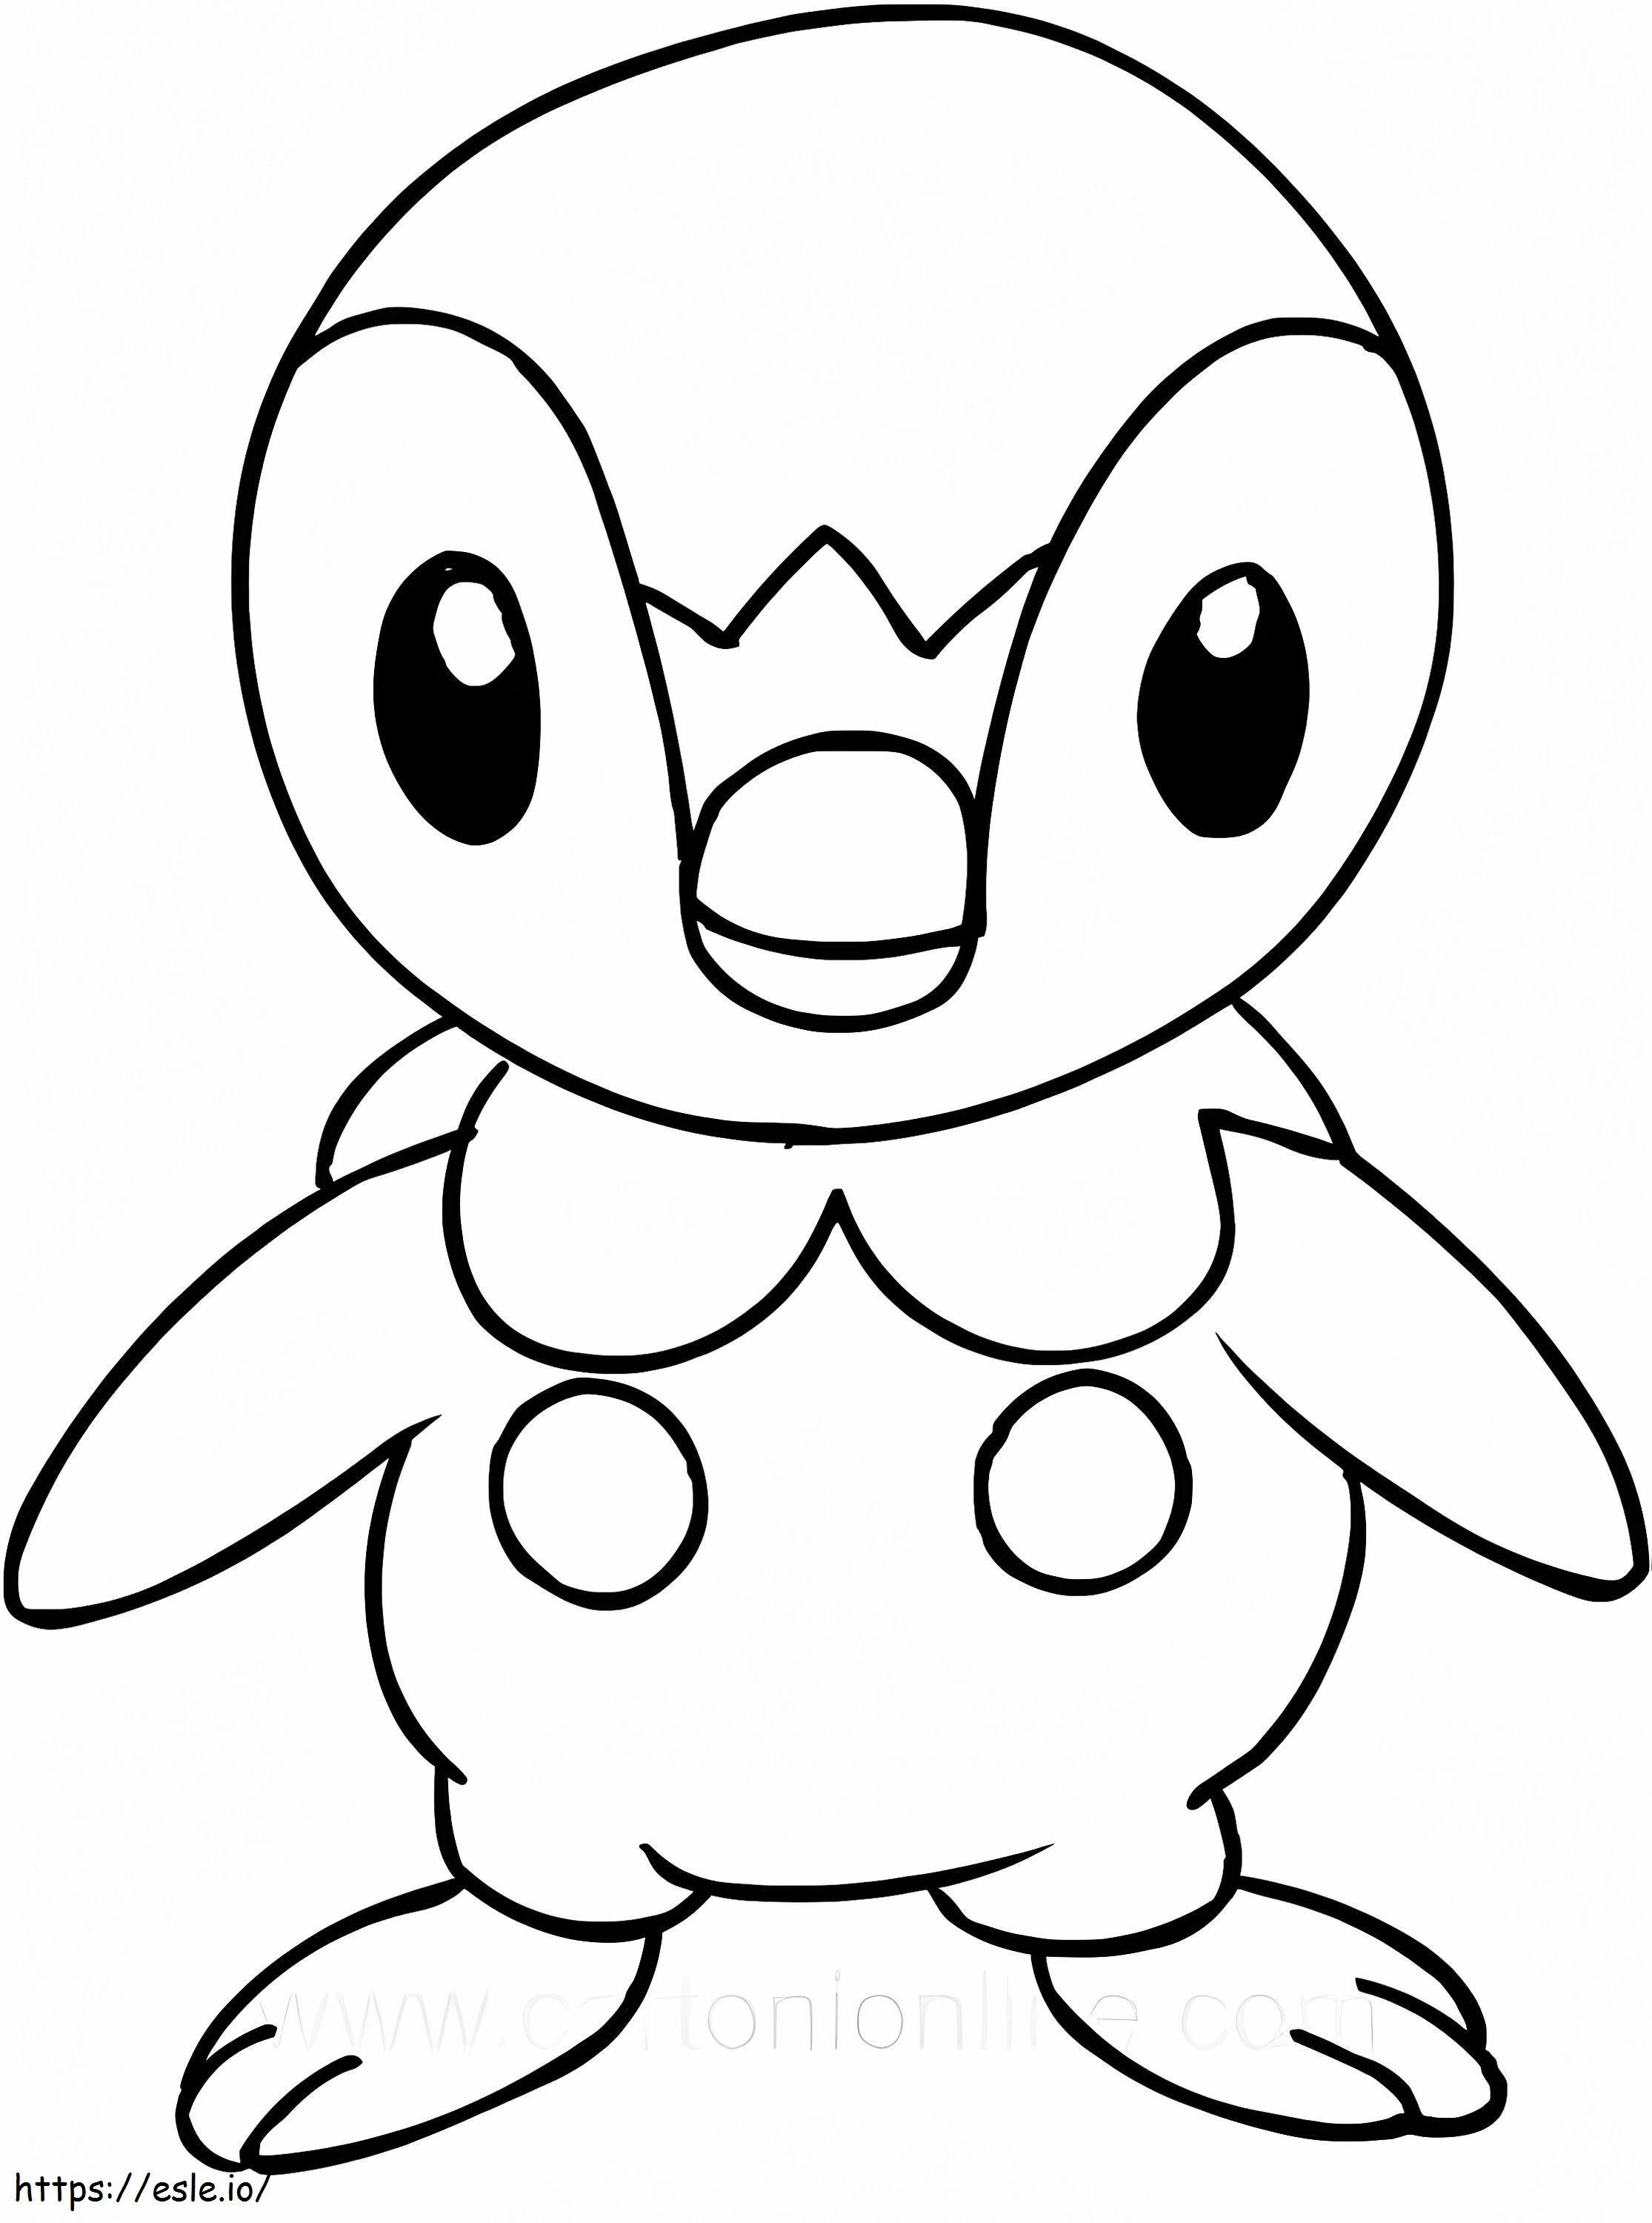 Piplup-Pokémon ausdrucken ausmalbilder